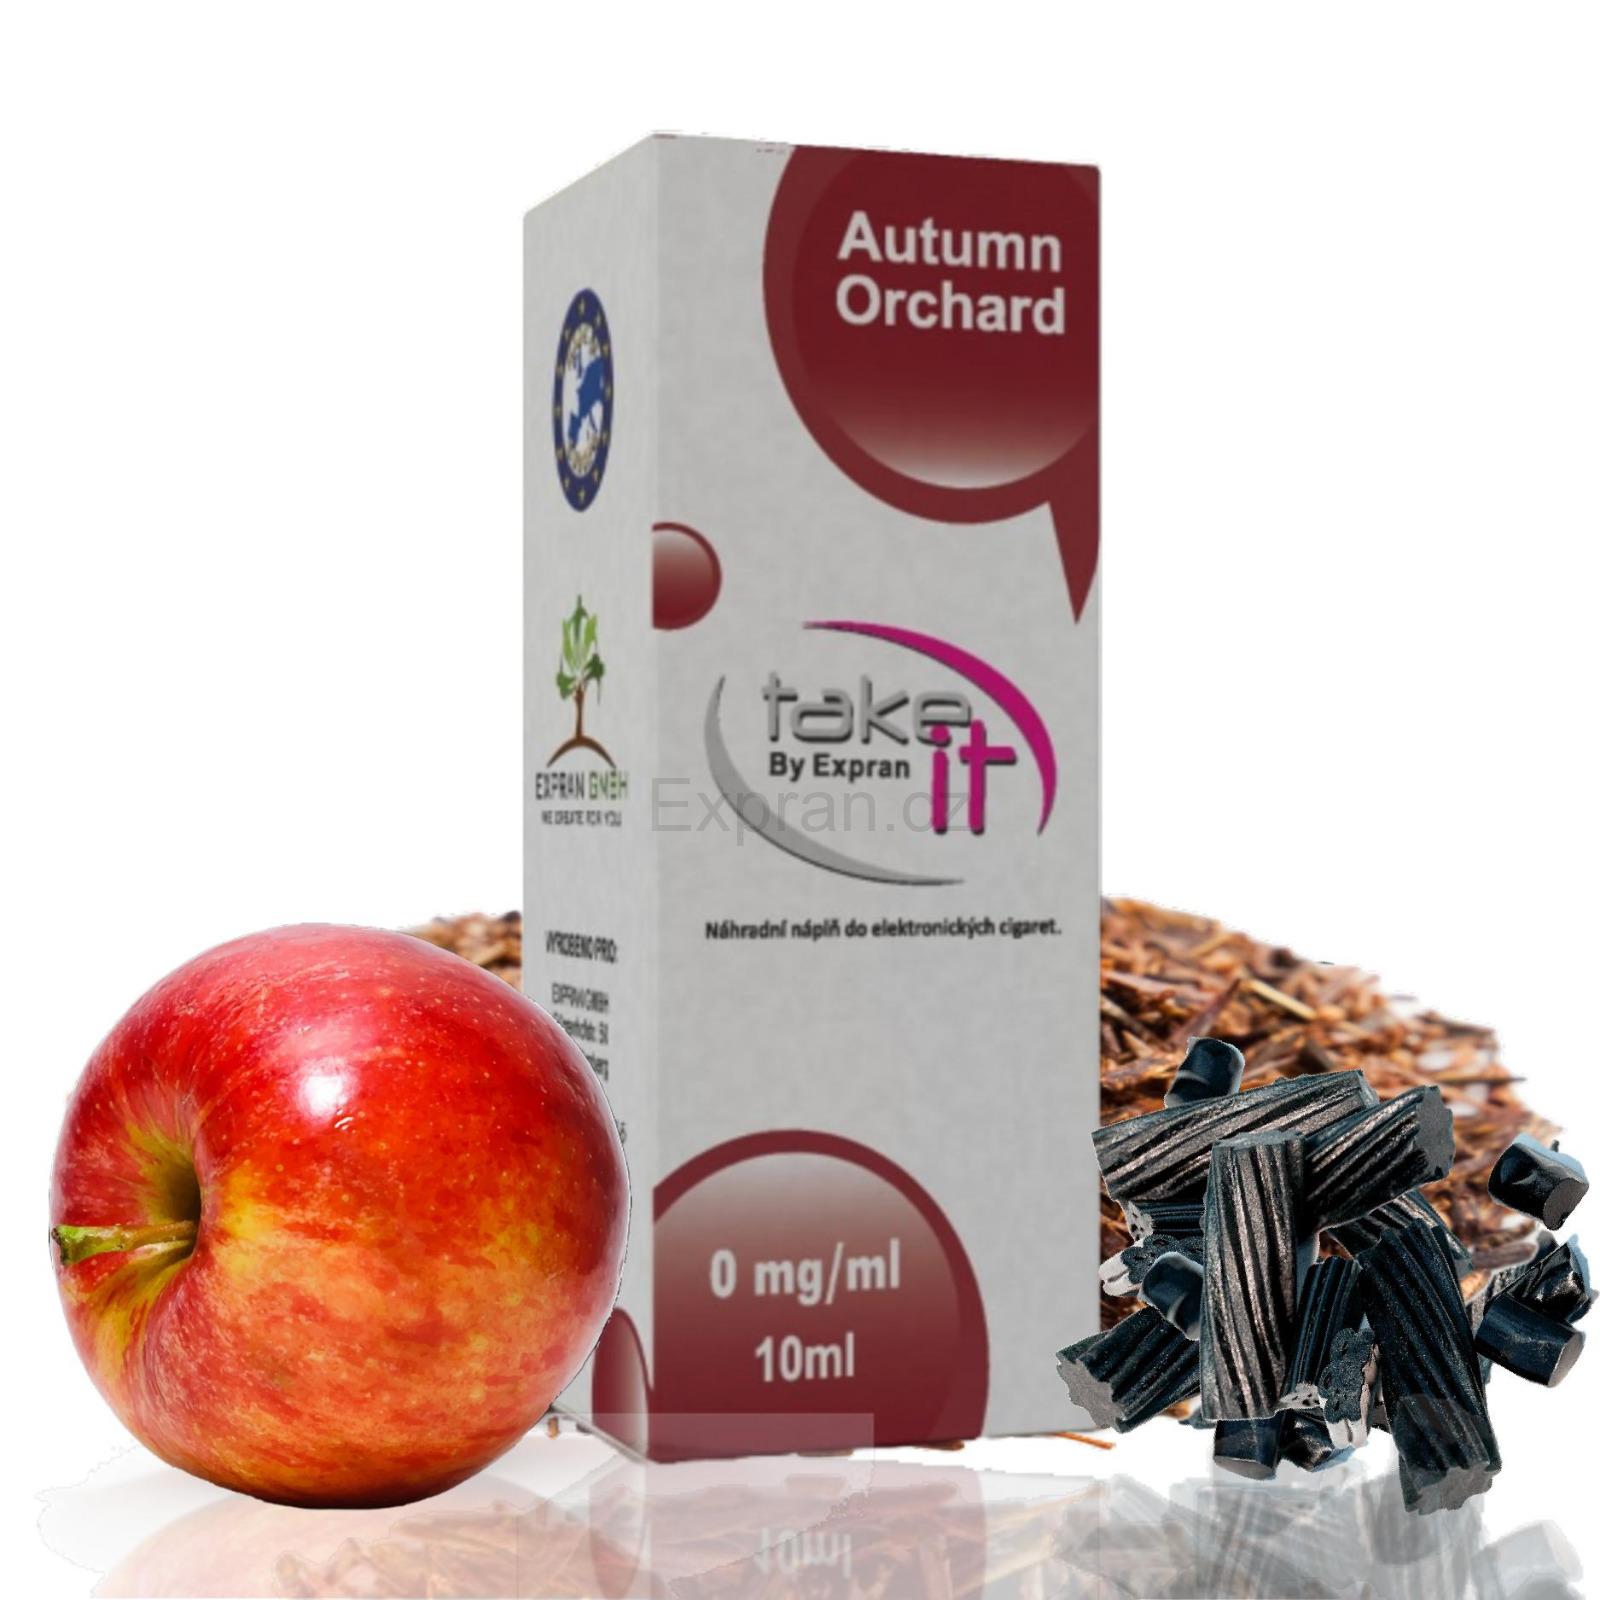 10 ml Take It - Autumn Orchard 6 mg/ml